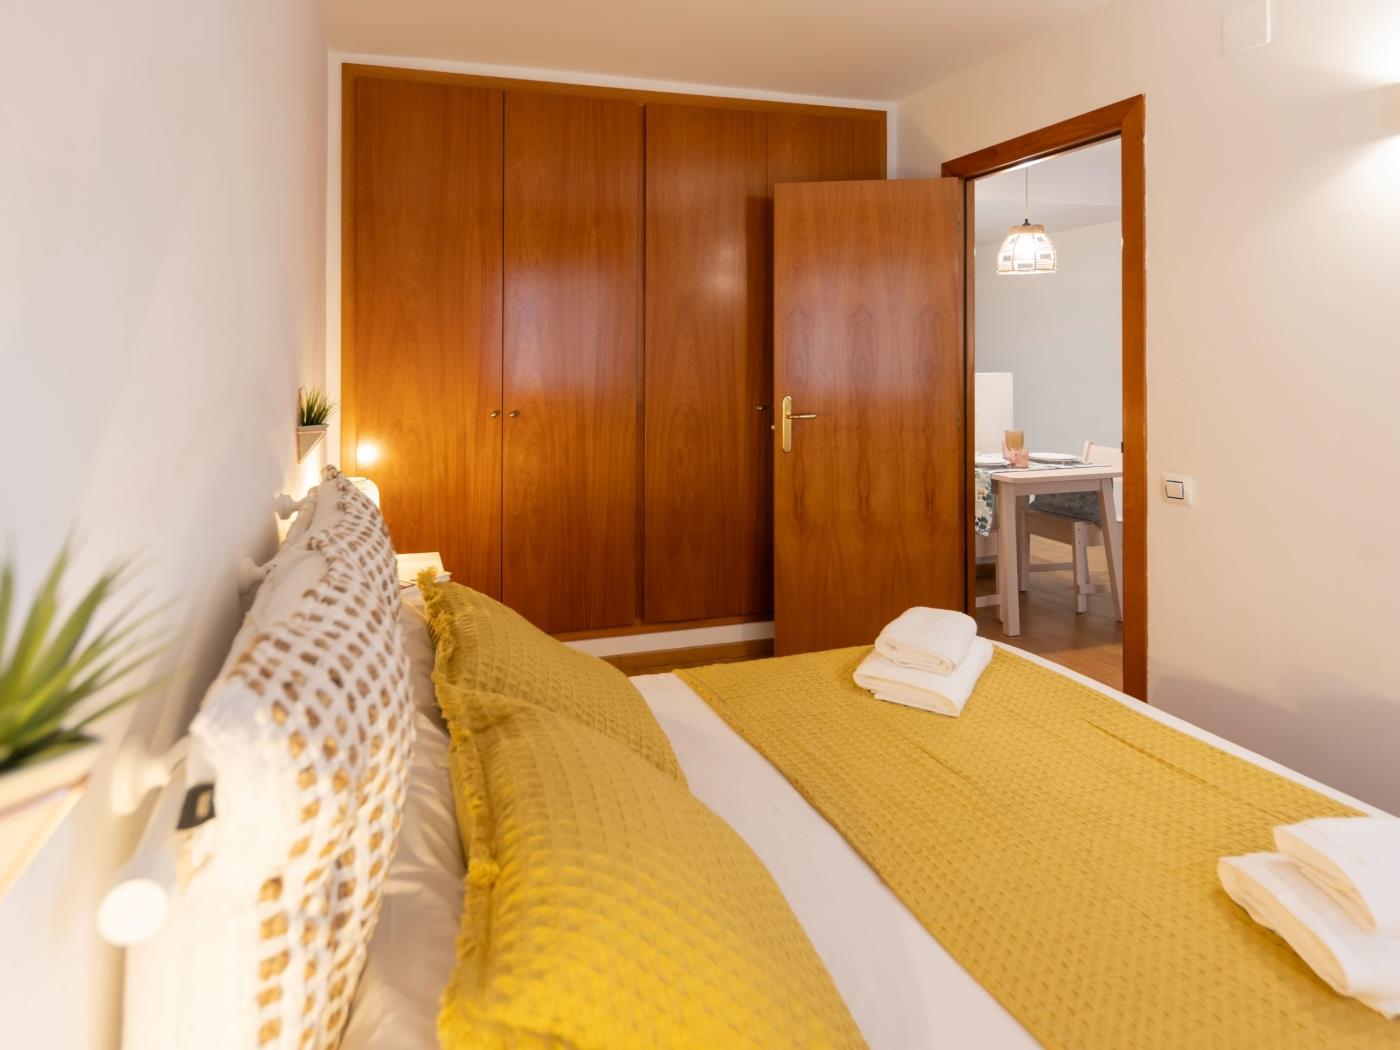 Bravissimo Sant Martí, acollidor pis d'1 habitació a Girona